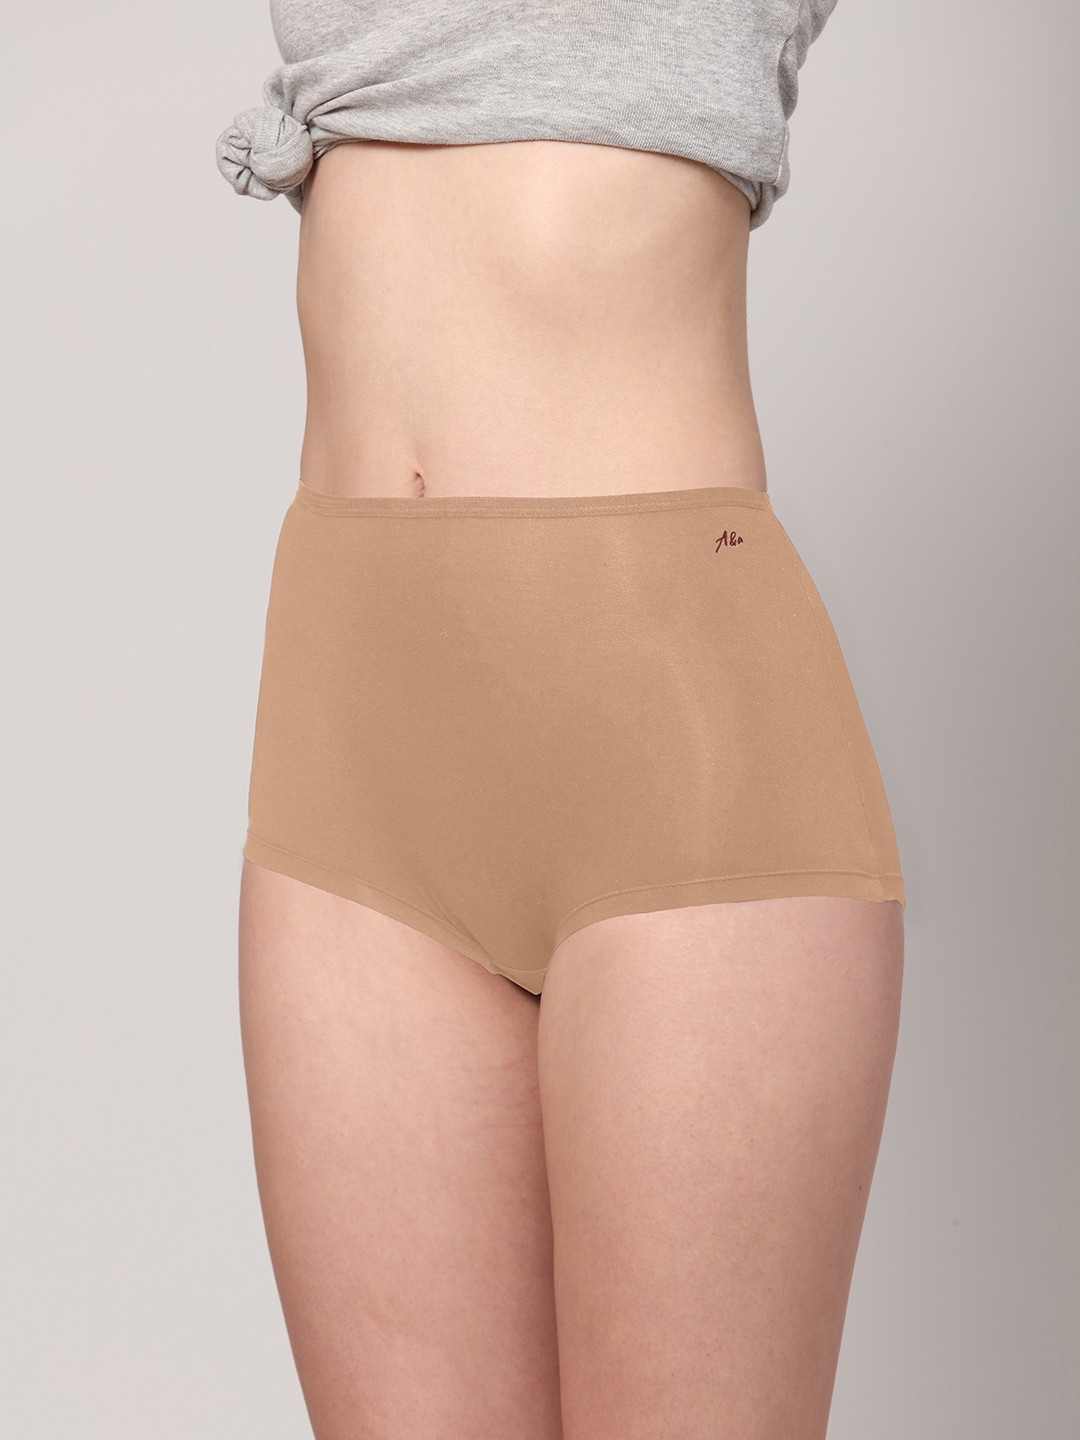 AshleyandAlvis Women's Panties Micro Modal, Anti Bacterial, Skinny Soft,  Premium Boys Leg -No Itching, Sweat Proof, Double In-seam Gusset